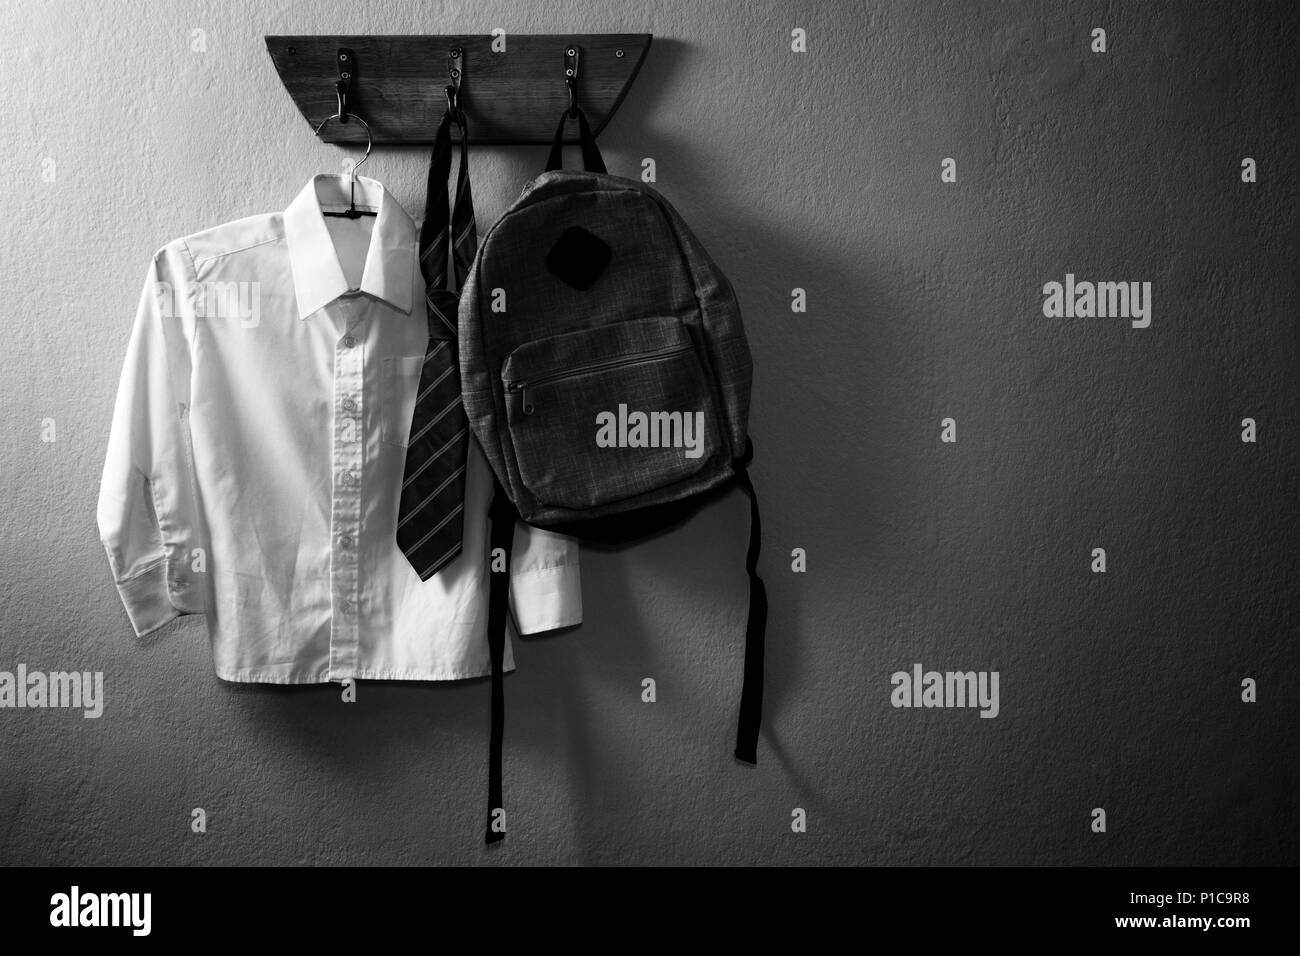 School uniform and schoolbag hanging on hook Stock Photo